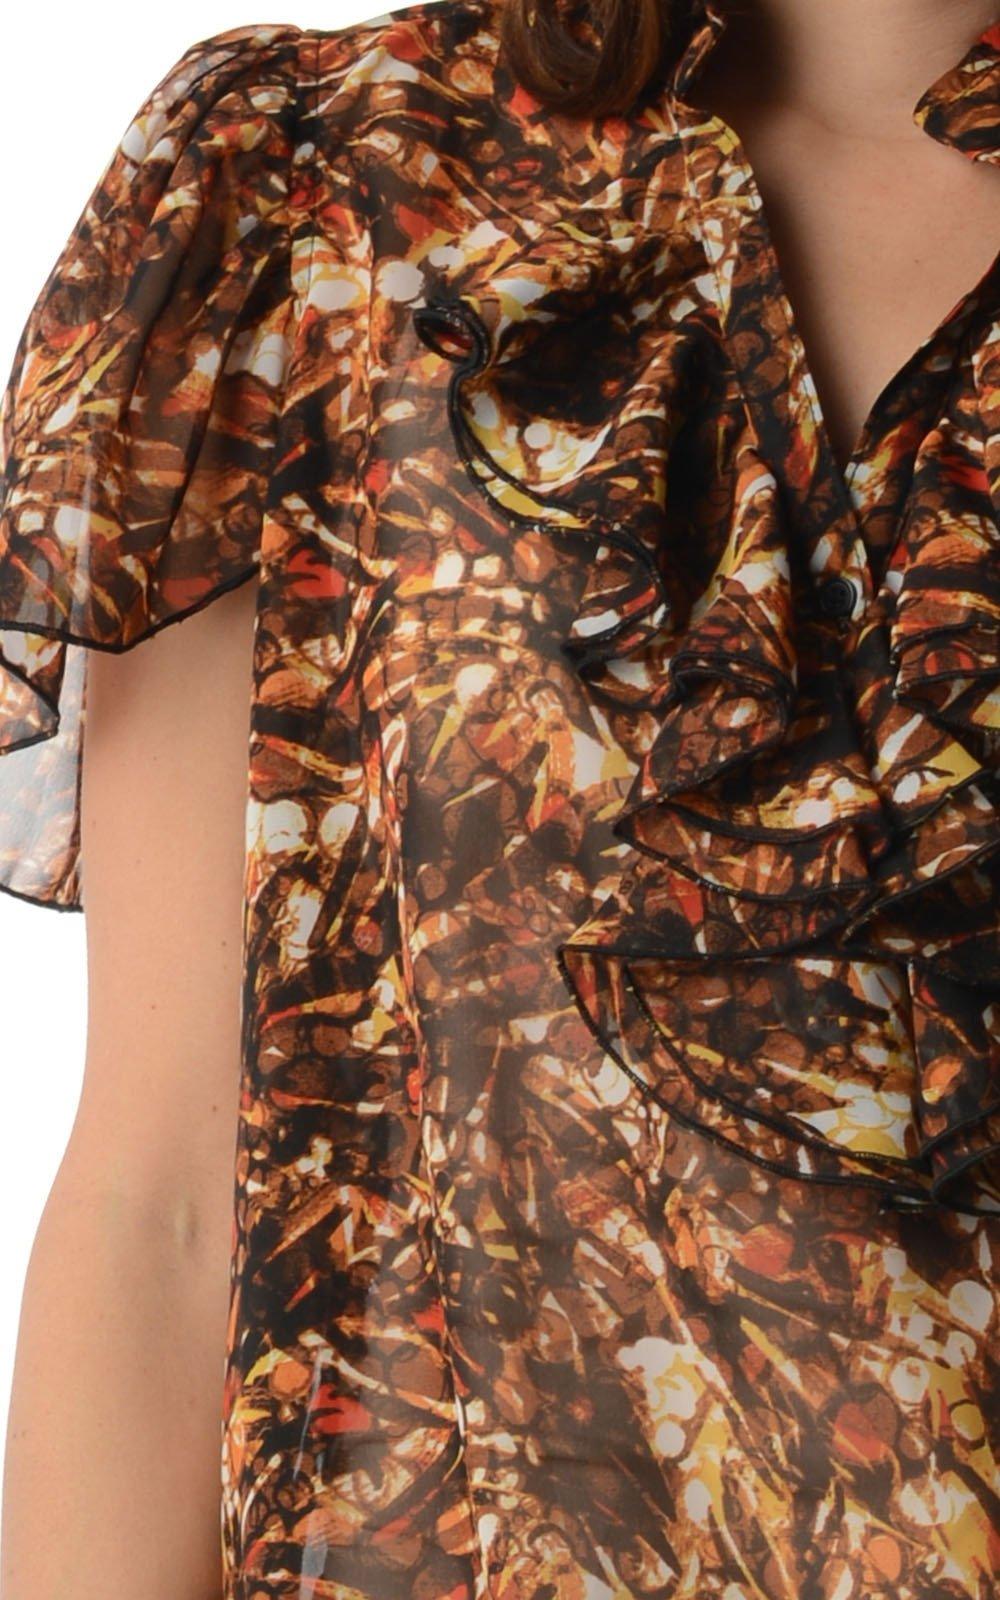 Women's Shirts Women's Printed Chiffon Smocked Waist Ruffle Top